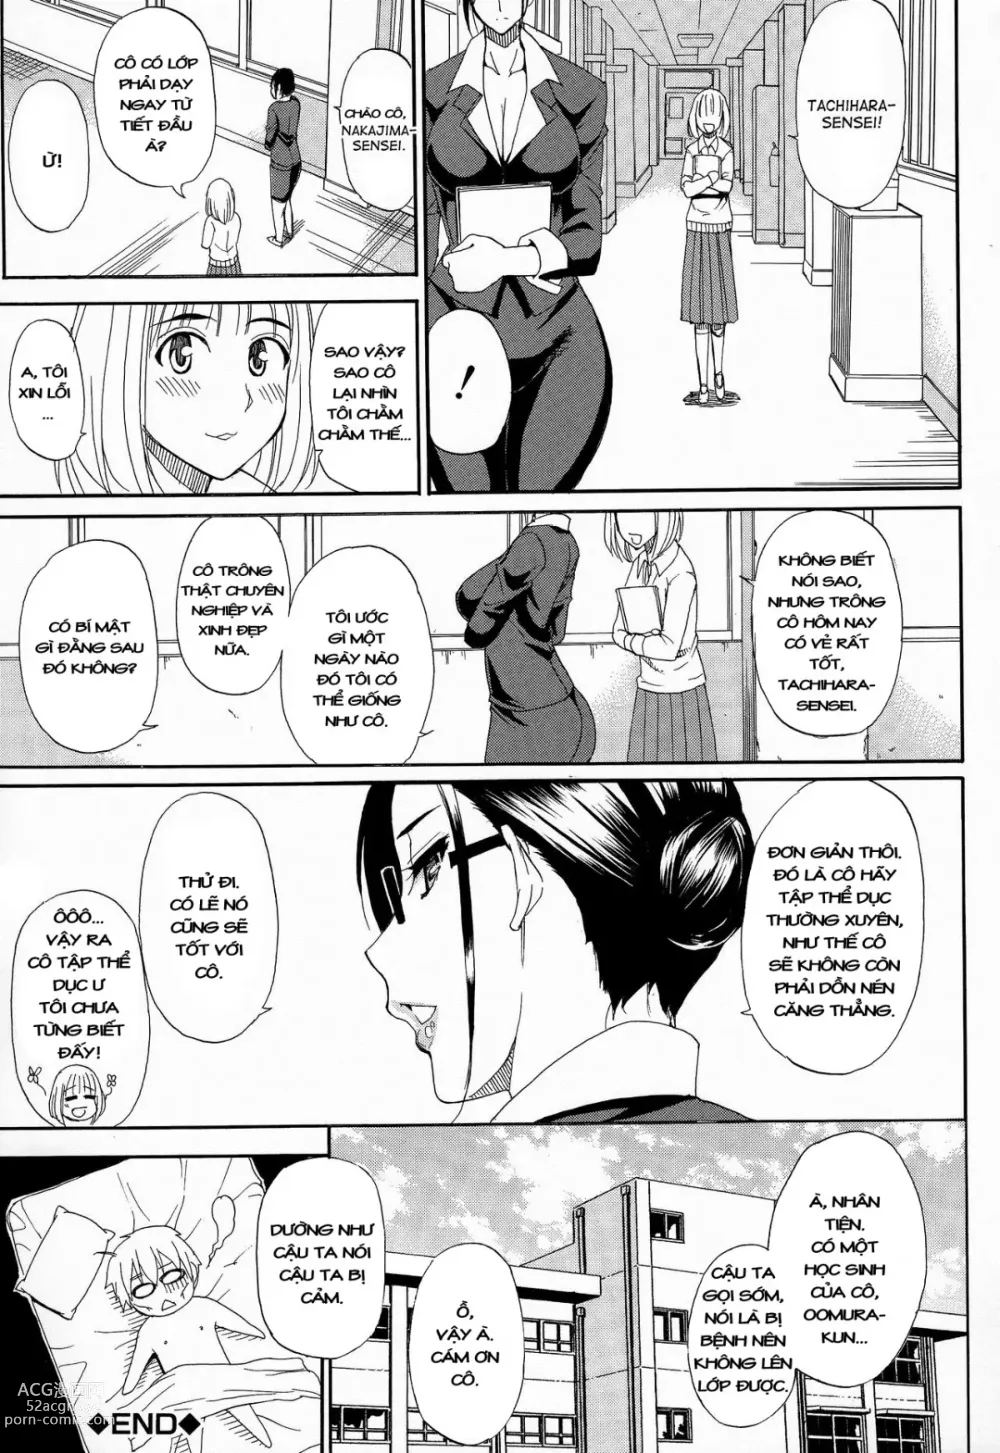 Page 36 of doujinshi PETLIFE